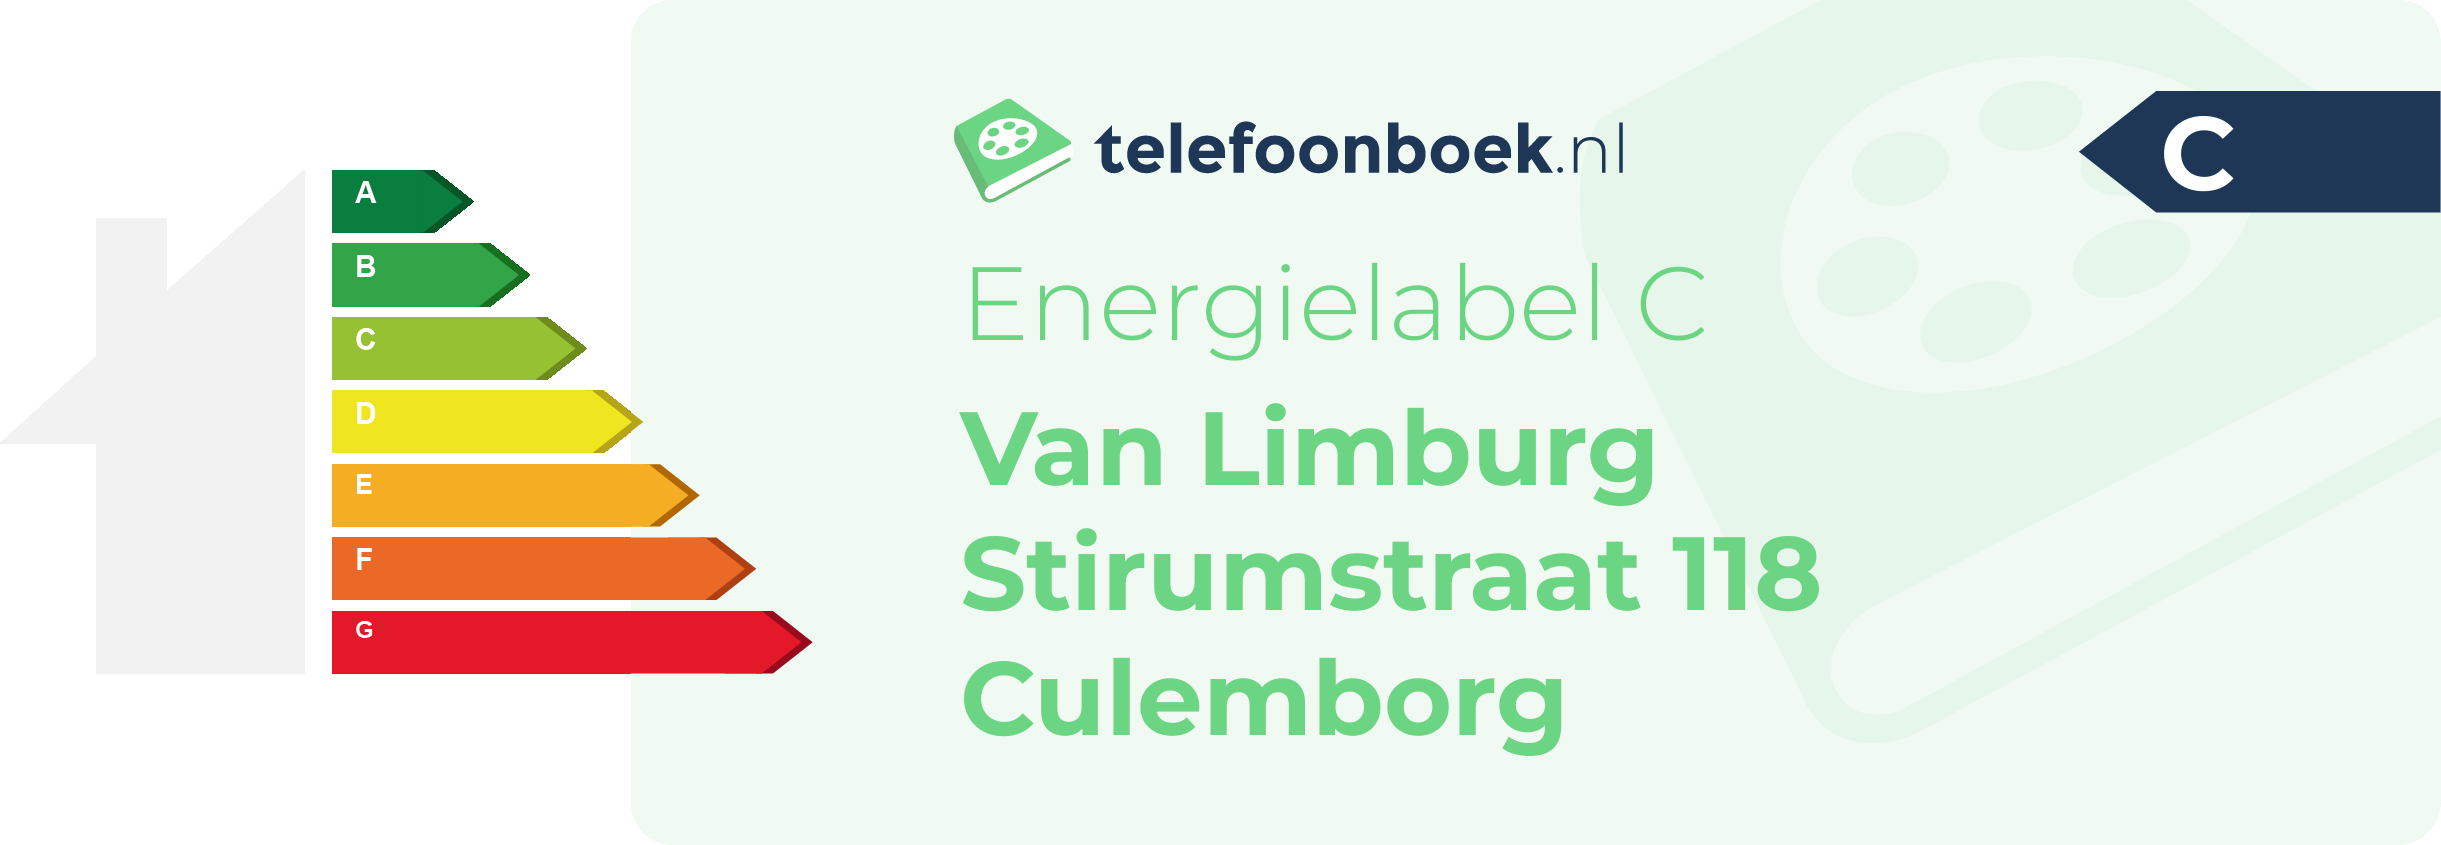 Energielabel Van Limburg Stirumstraat 118 Culemborg